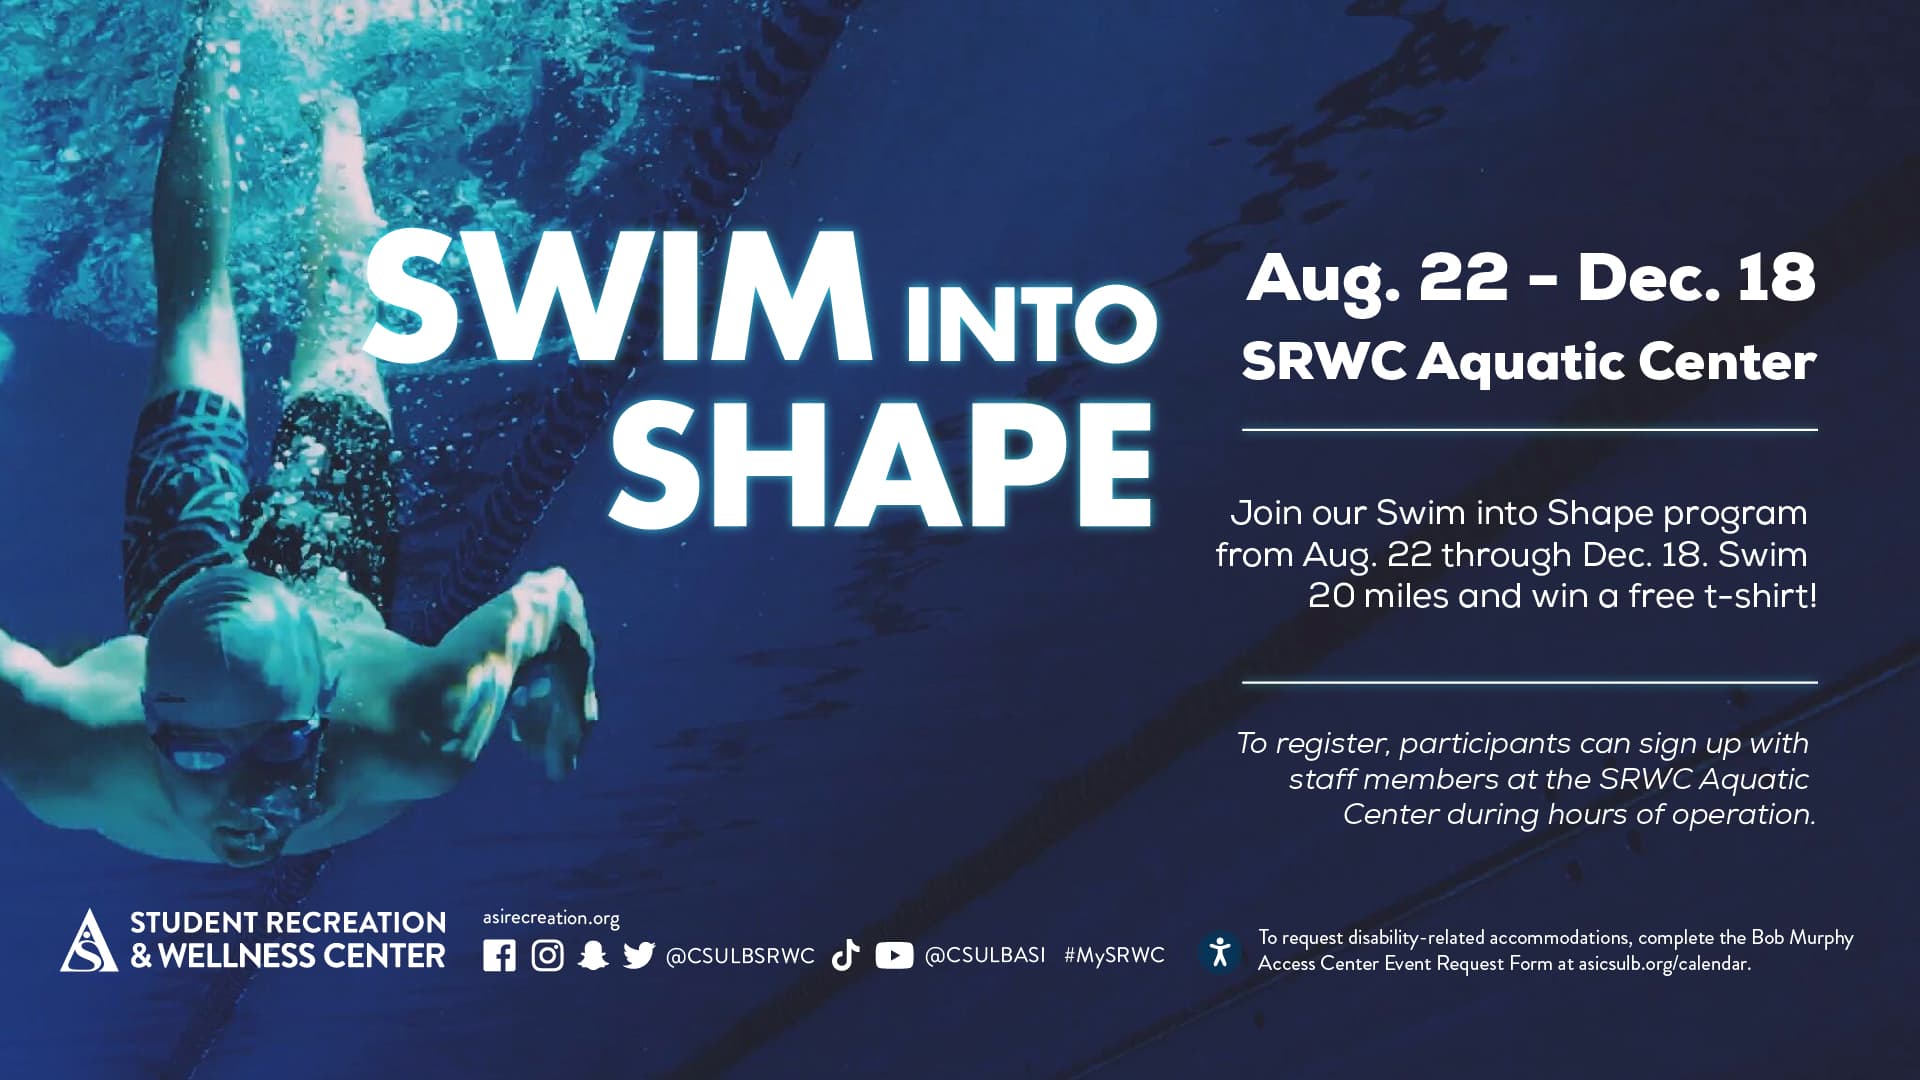 https://ftp.asicsulb.org/images/Aquatics-Safety/SM23_SRWC_Swim-Into-Shape_dgtl-promo.jpg